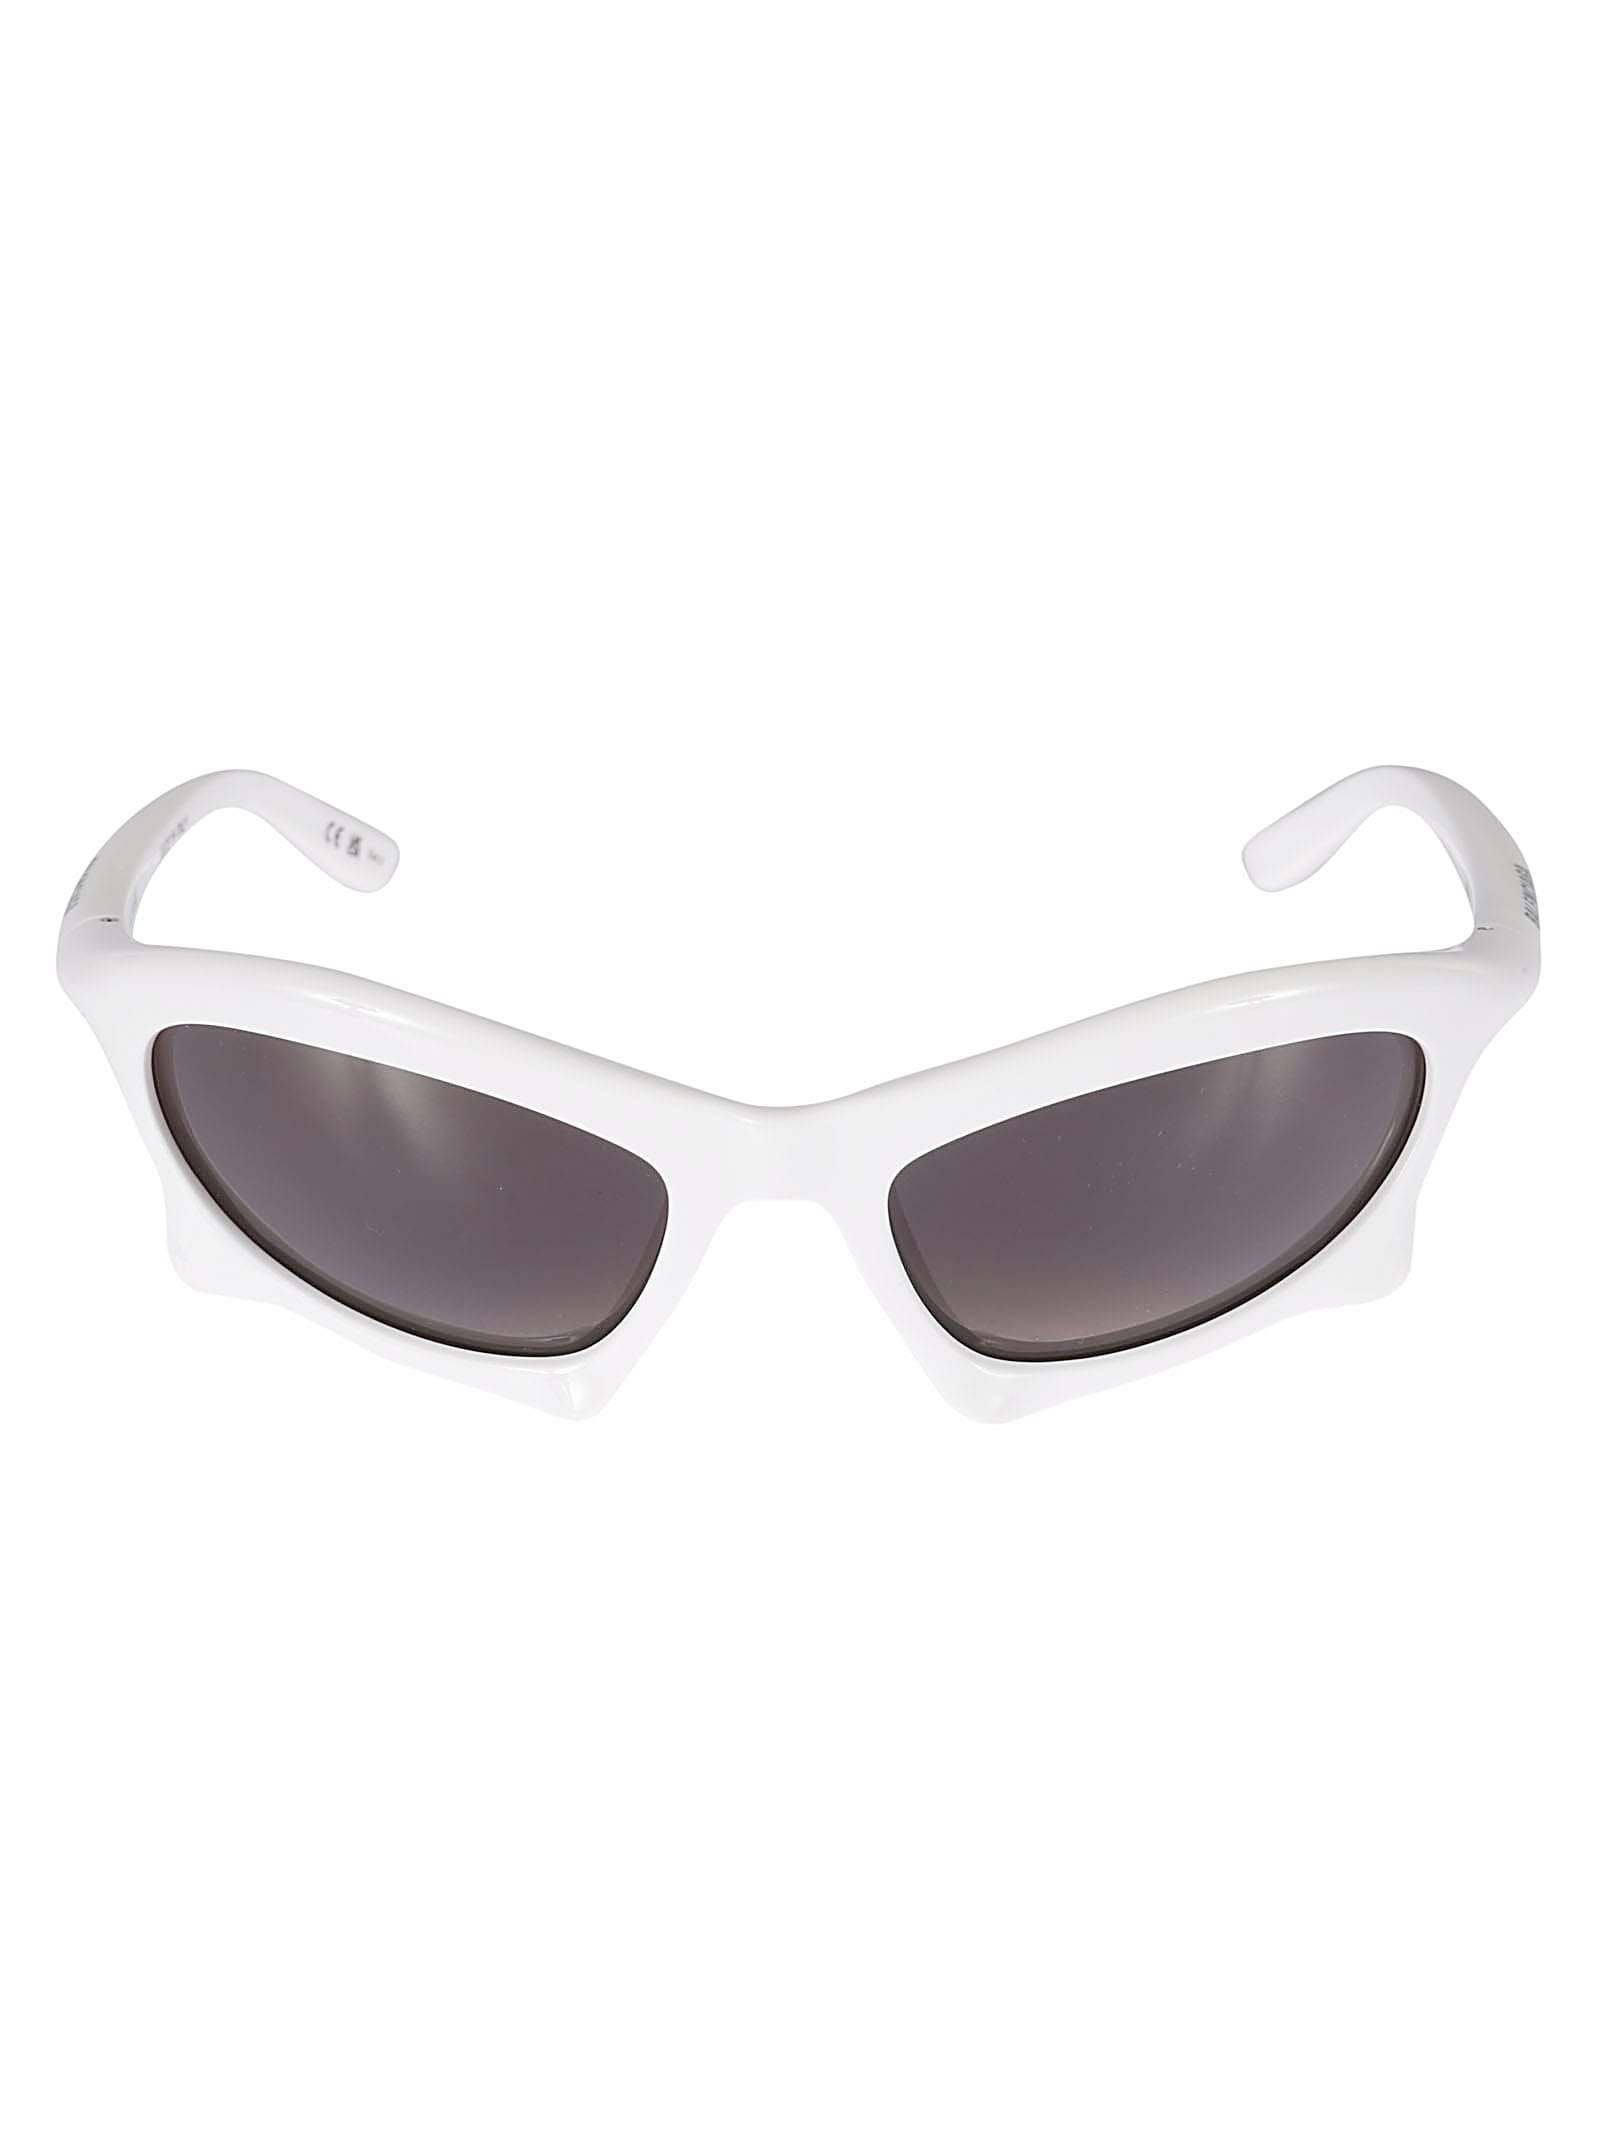 Balenciaga Bat Rectangle Sunglasses In White/grey